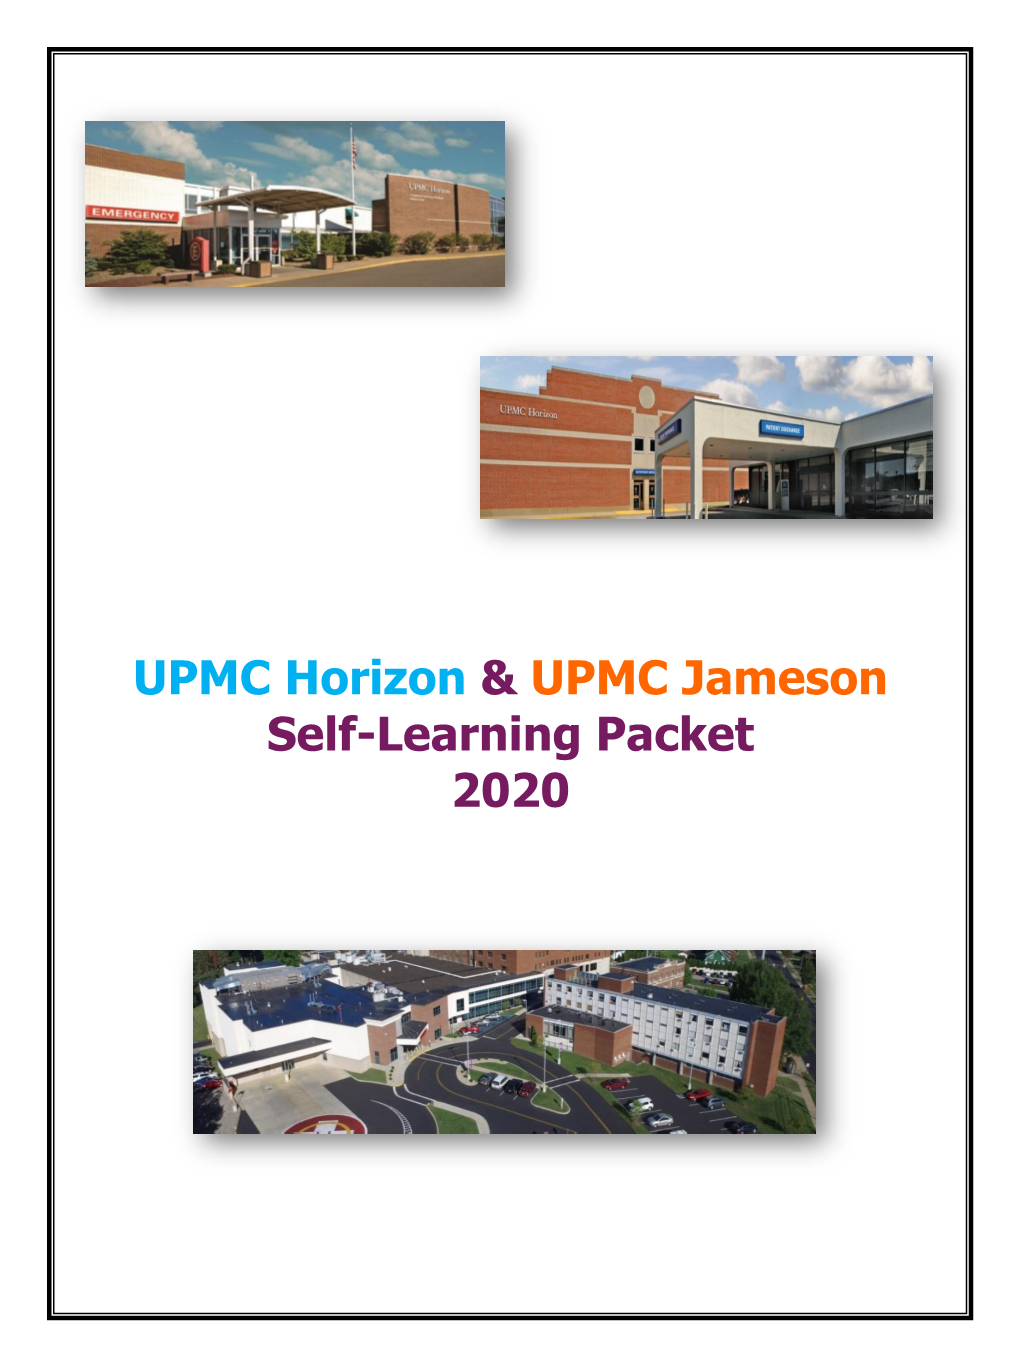 UPMC Horizon & UPMC Jameson Self-Learning Packet 2020